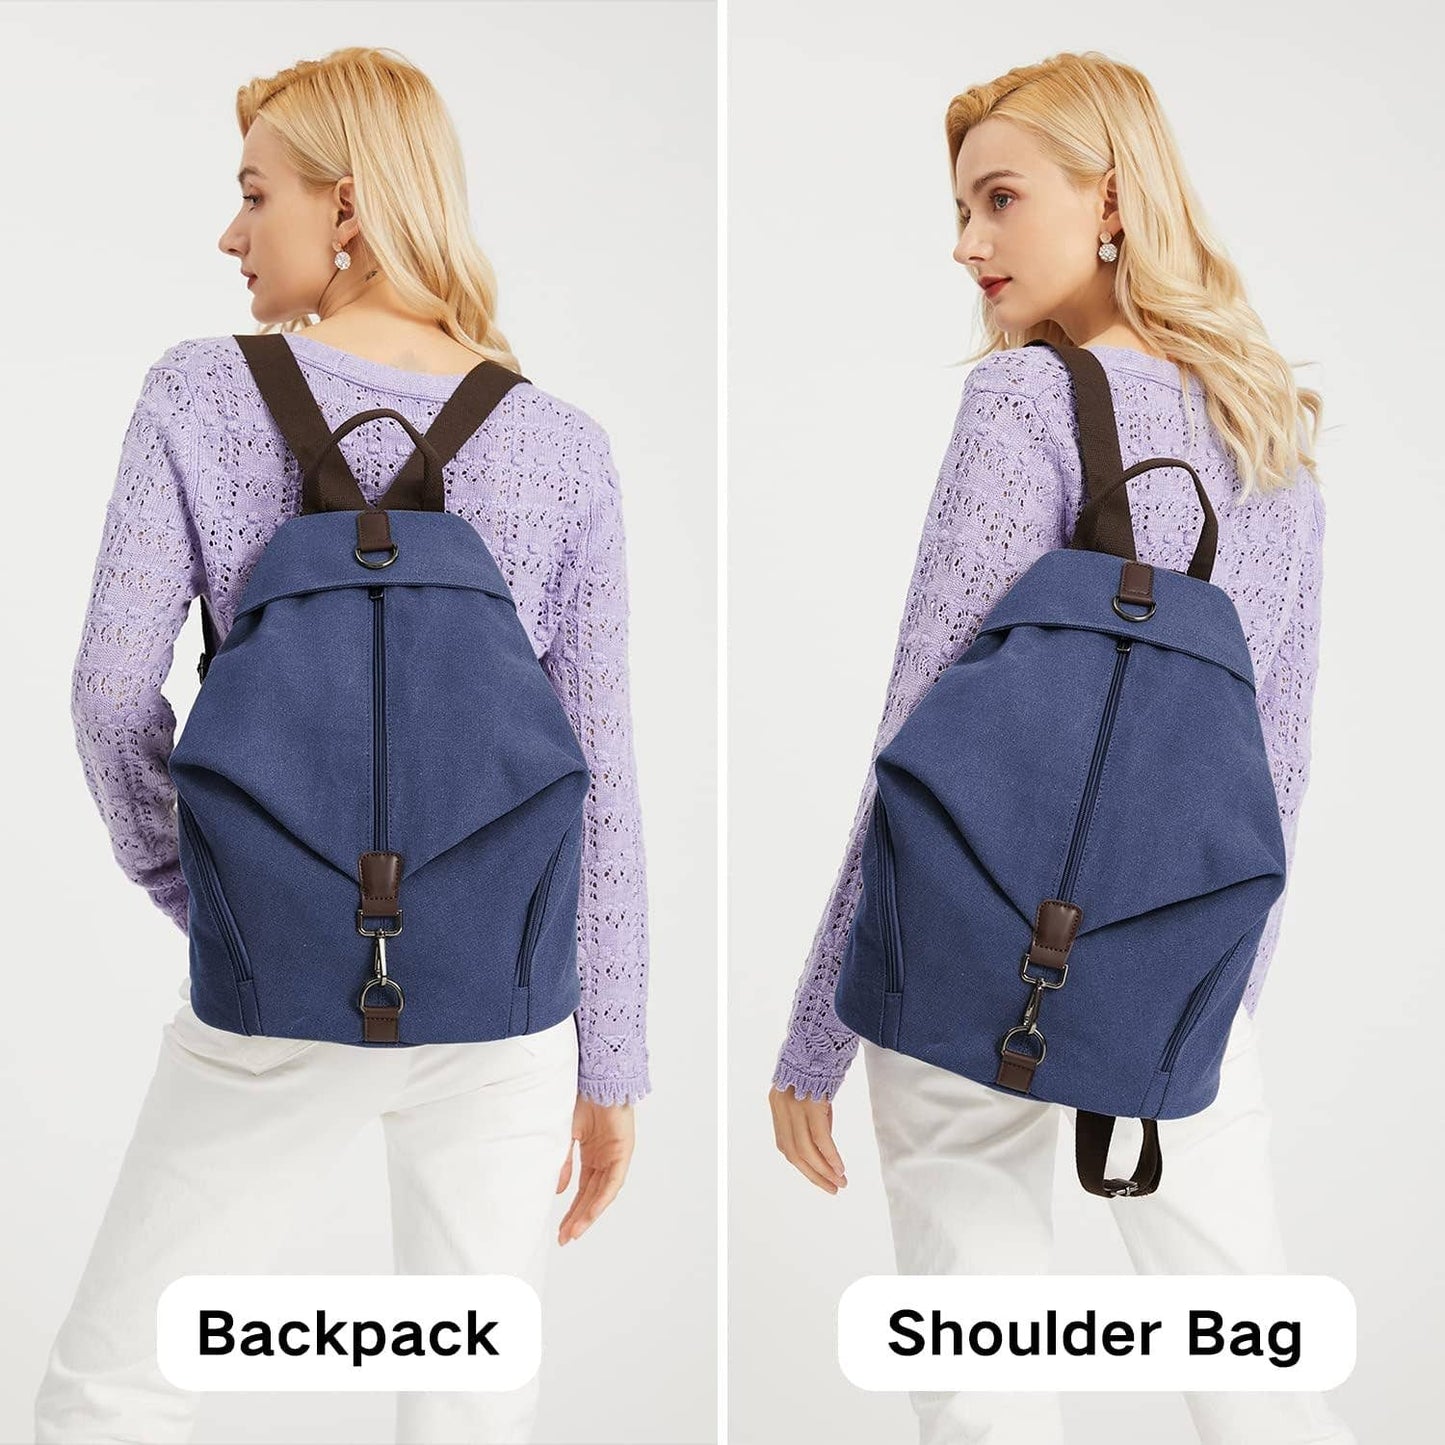 JOSEKO NEW Blue Denim Color Canvas Bag PERFECT SIZE Daypack